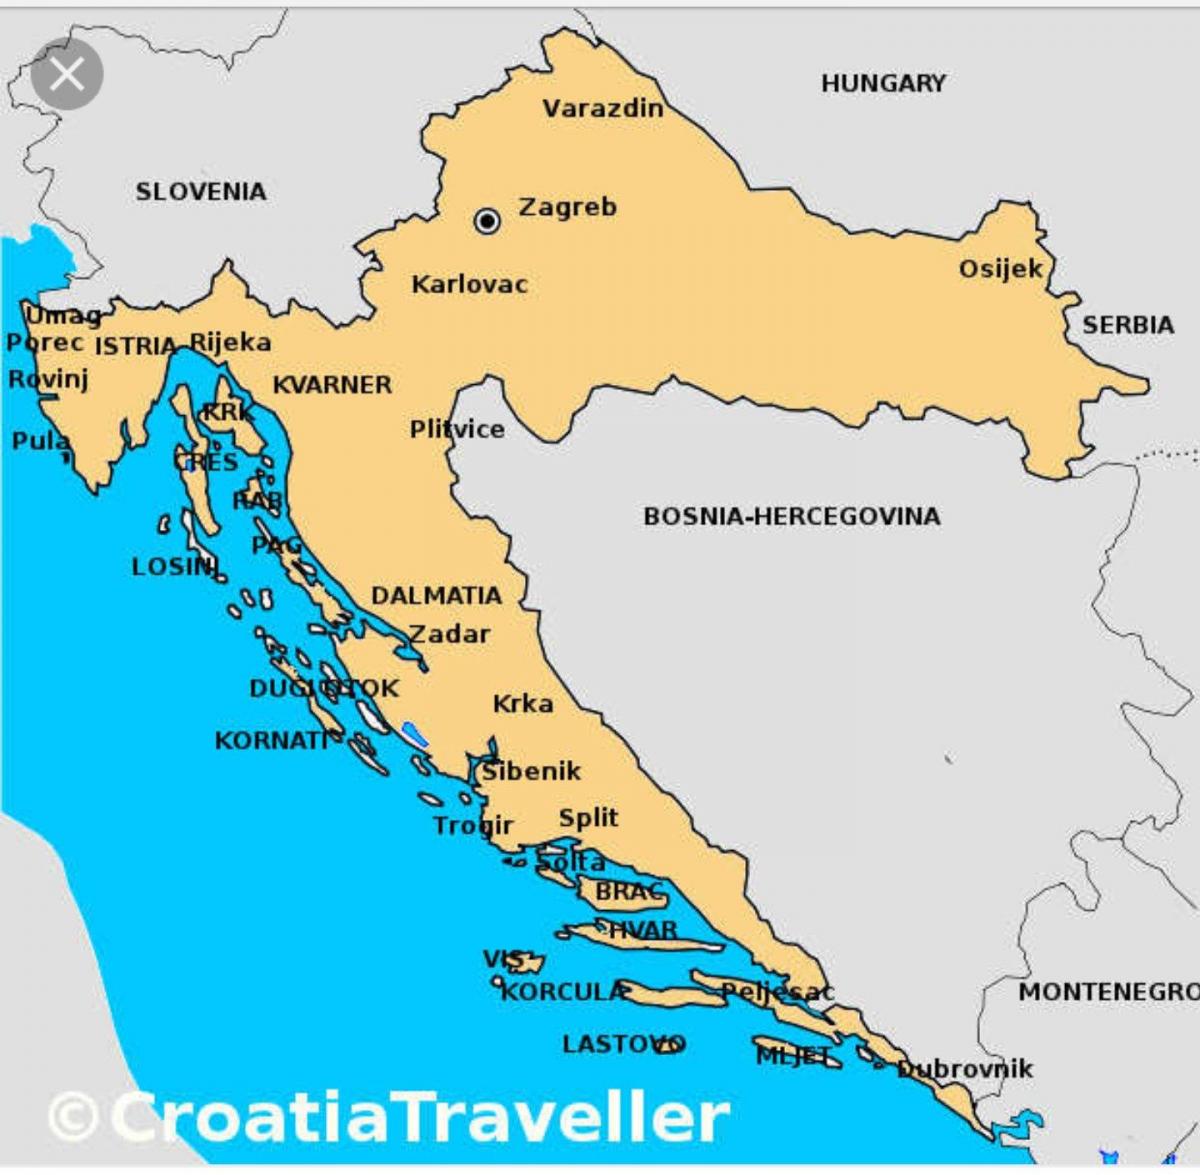 Croatia on a map